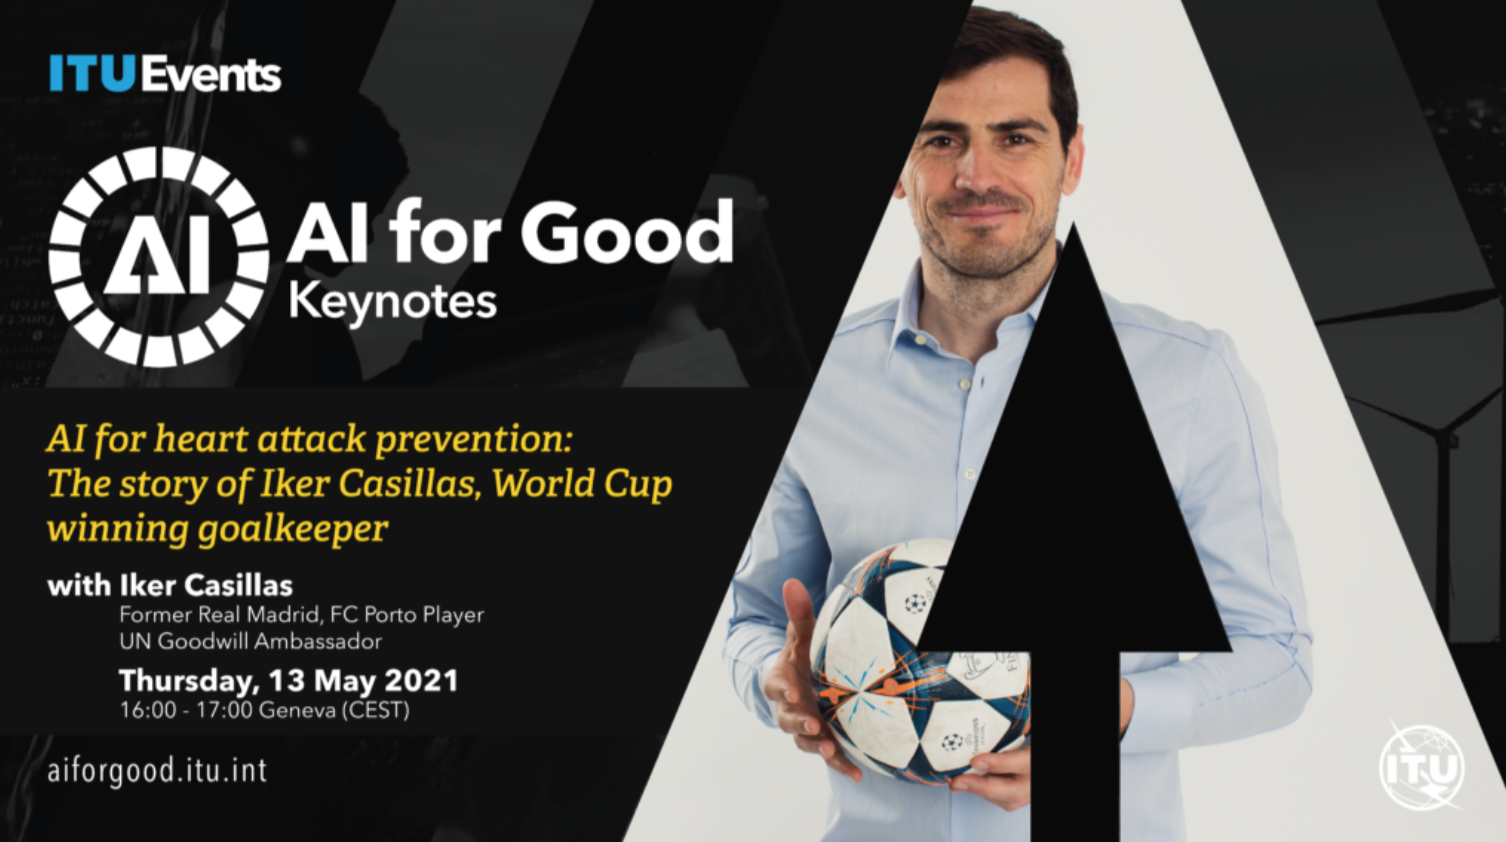 AI for Heart Attack Prevention: The Story of Iker Casillas, World Cup Winning Goalkeeper, Geneva, Genf, Switzerland